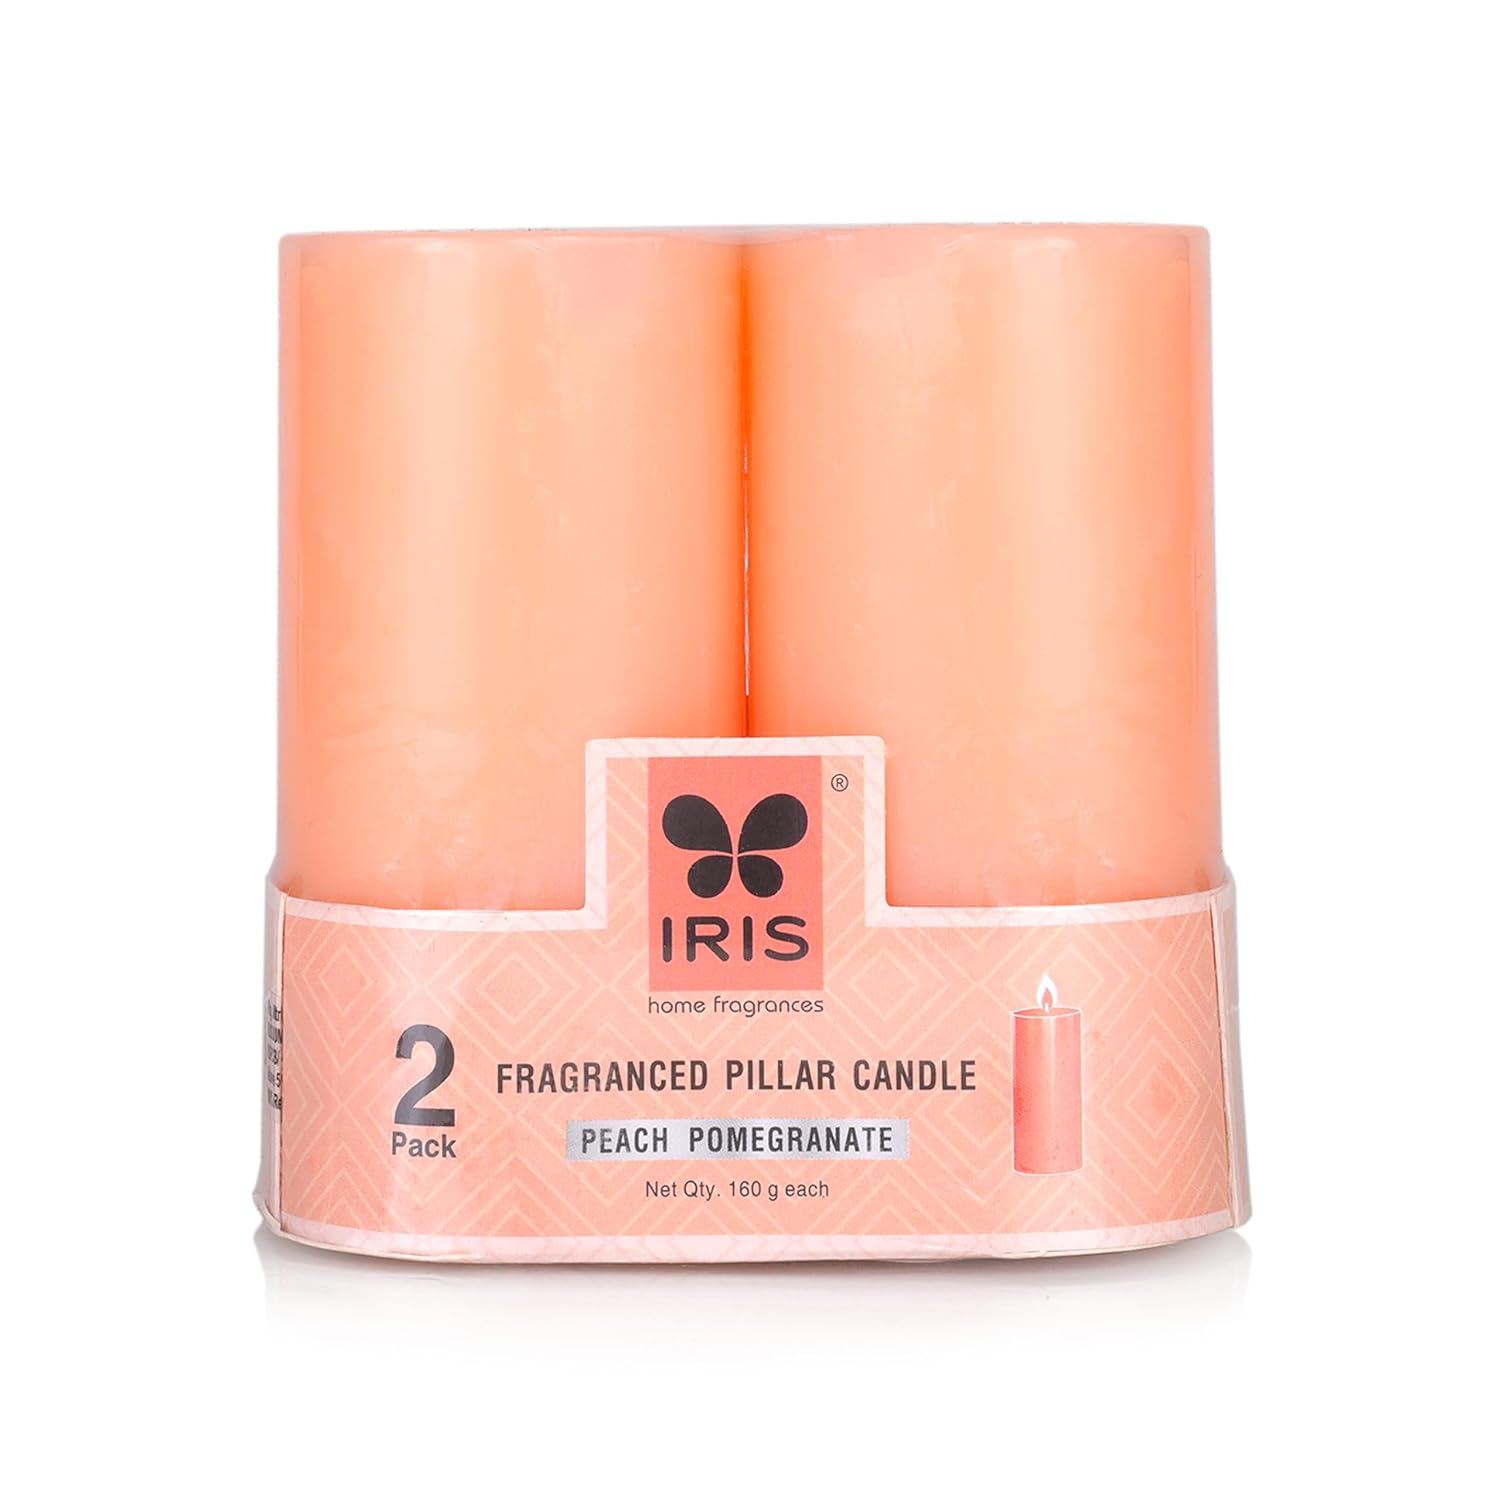 Cycle Iris Homefragrances Pack of 2 Peach Pomogranate Fragrance Pillar Candles- 160g Each- 2"x 4" (Peach Pomogranate) 160gm